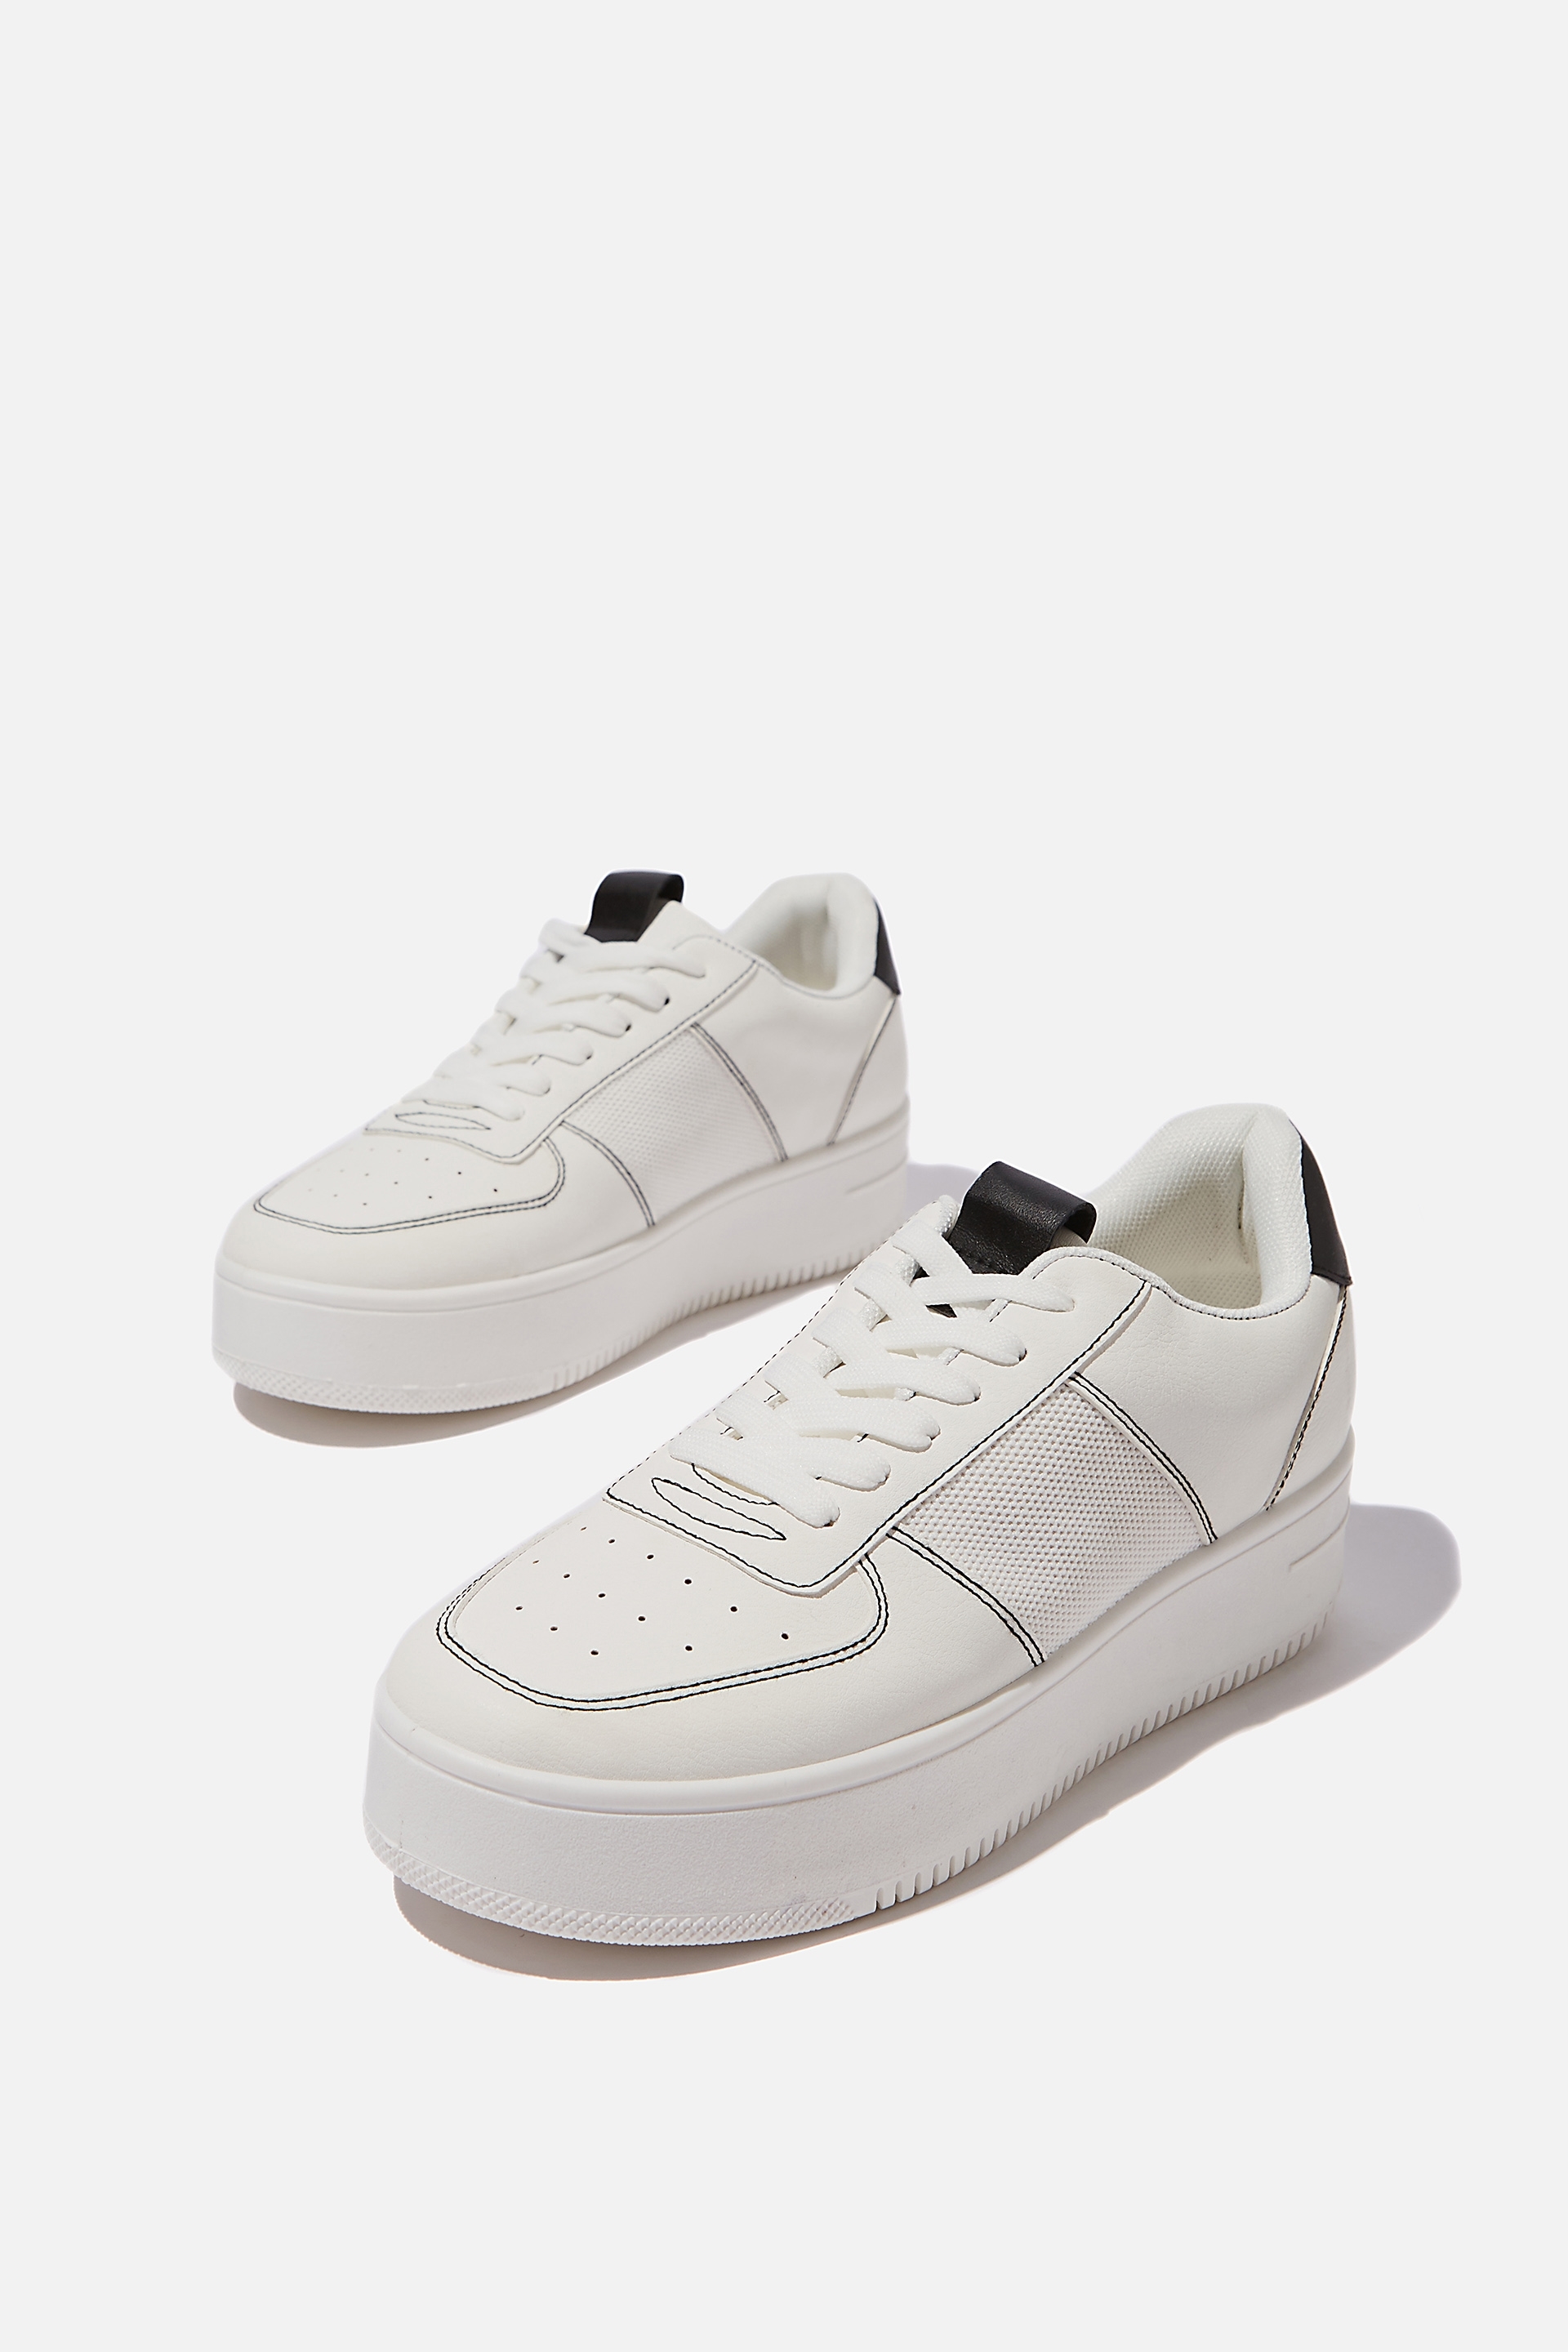 Rubi - Alexa Platform Sneaker - White black